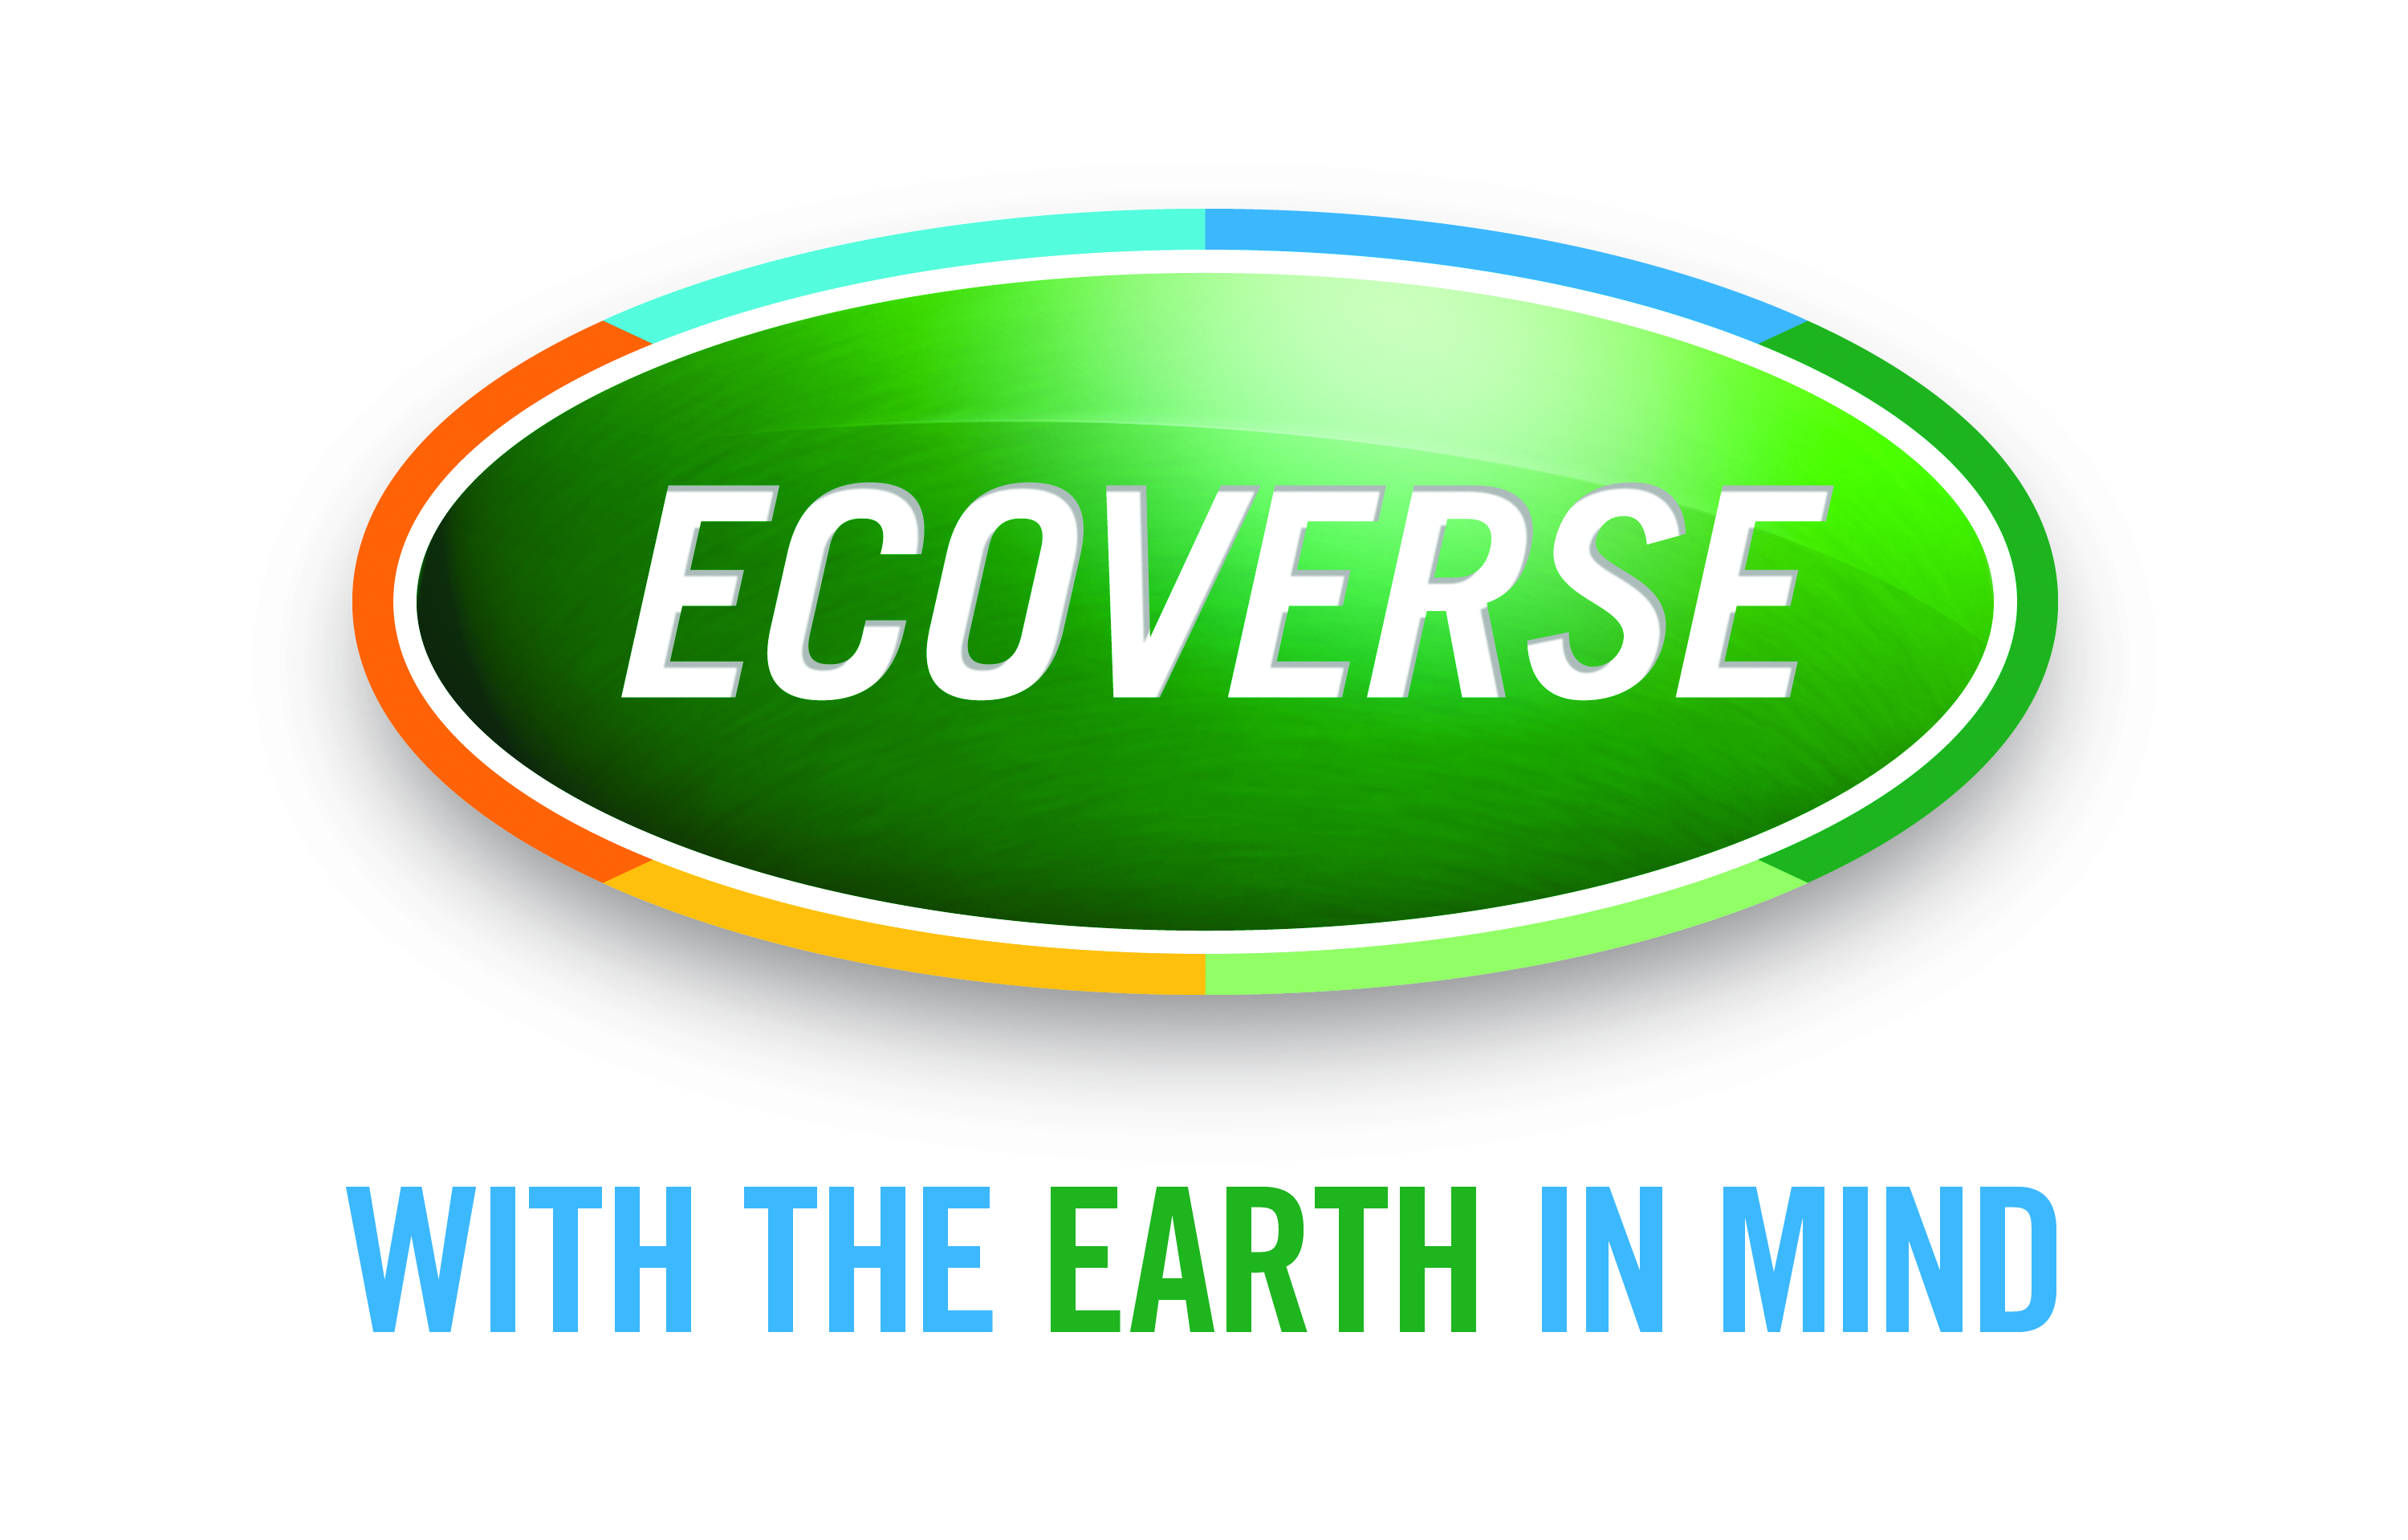 Uploaded Image: /vs-uploads/logos/Ecoverse logo color with tag (1).jpg